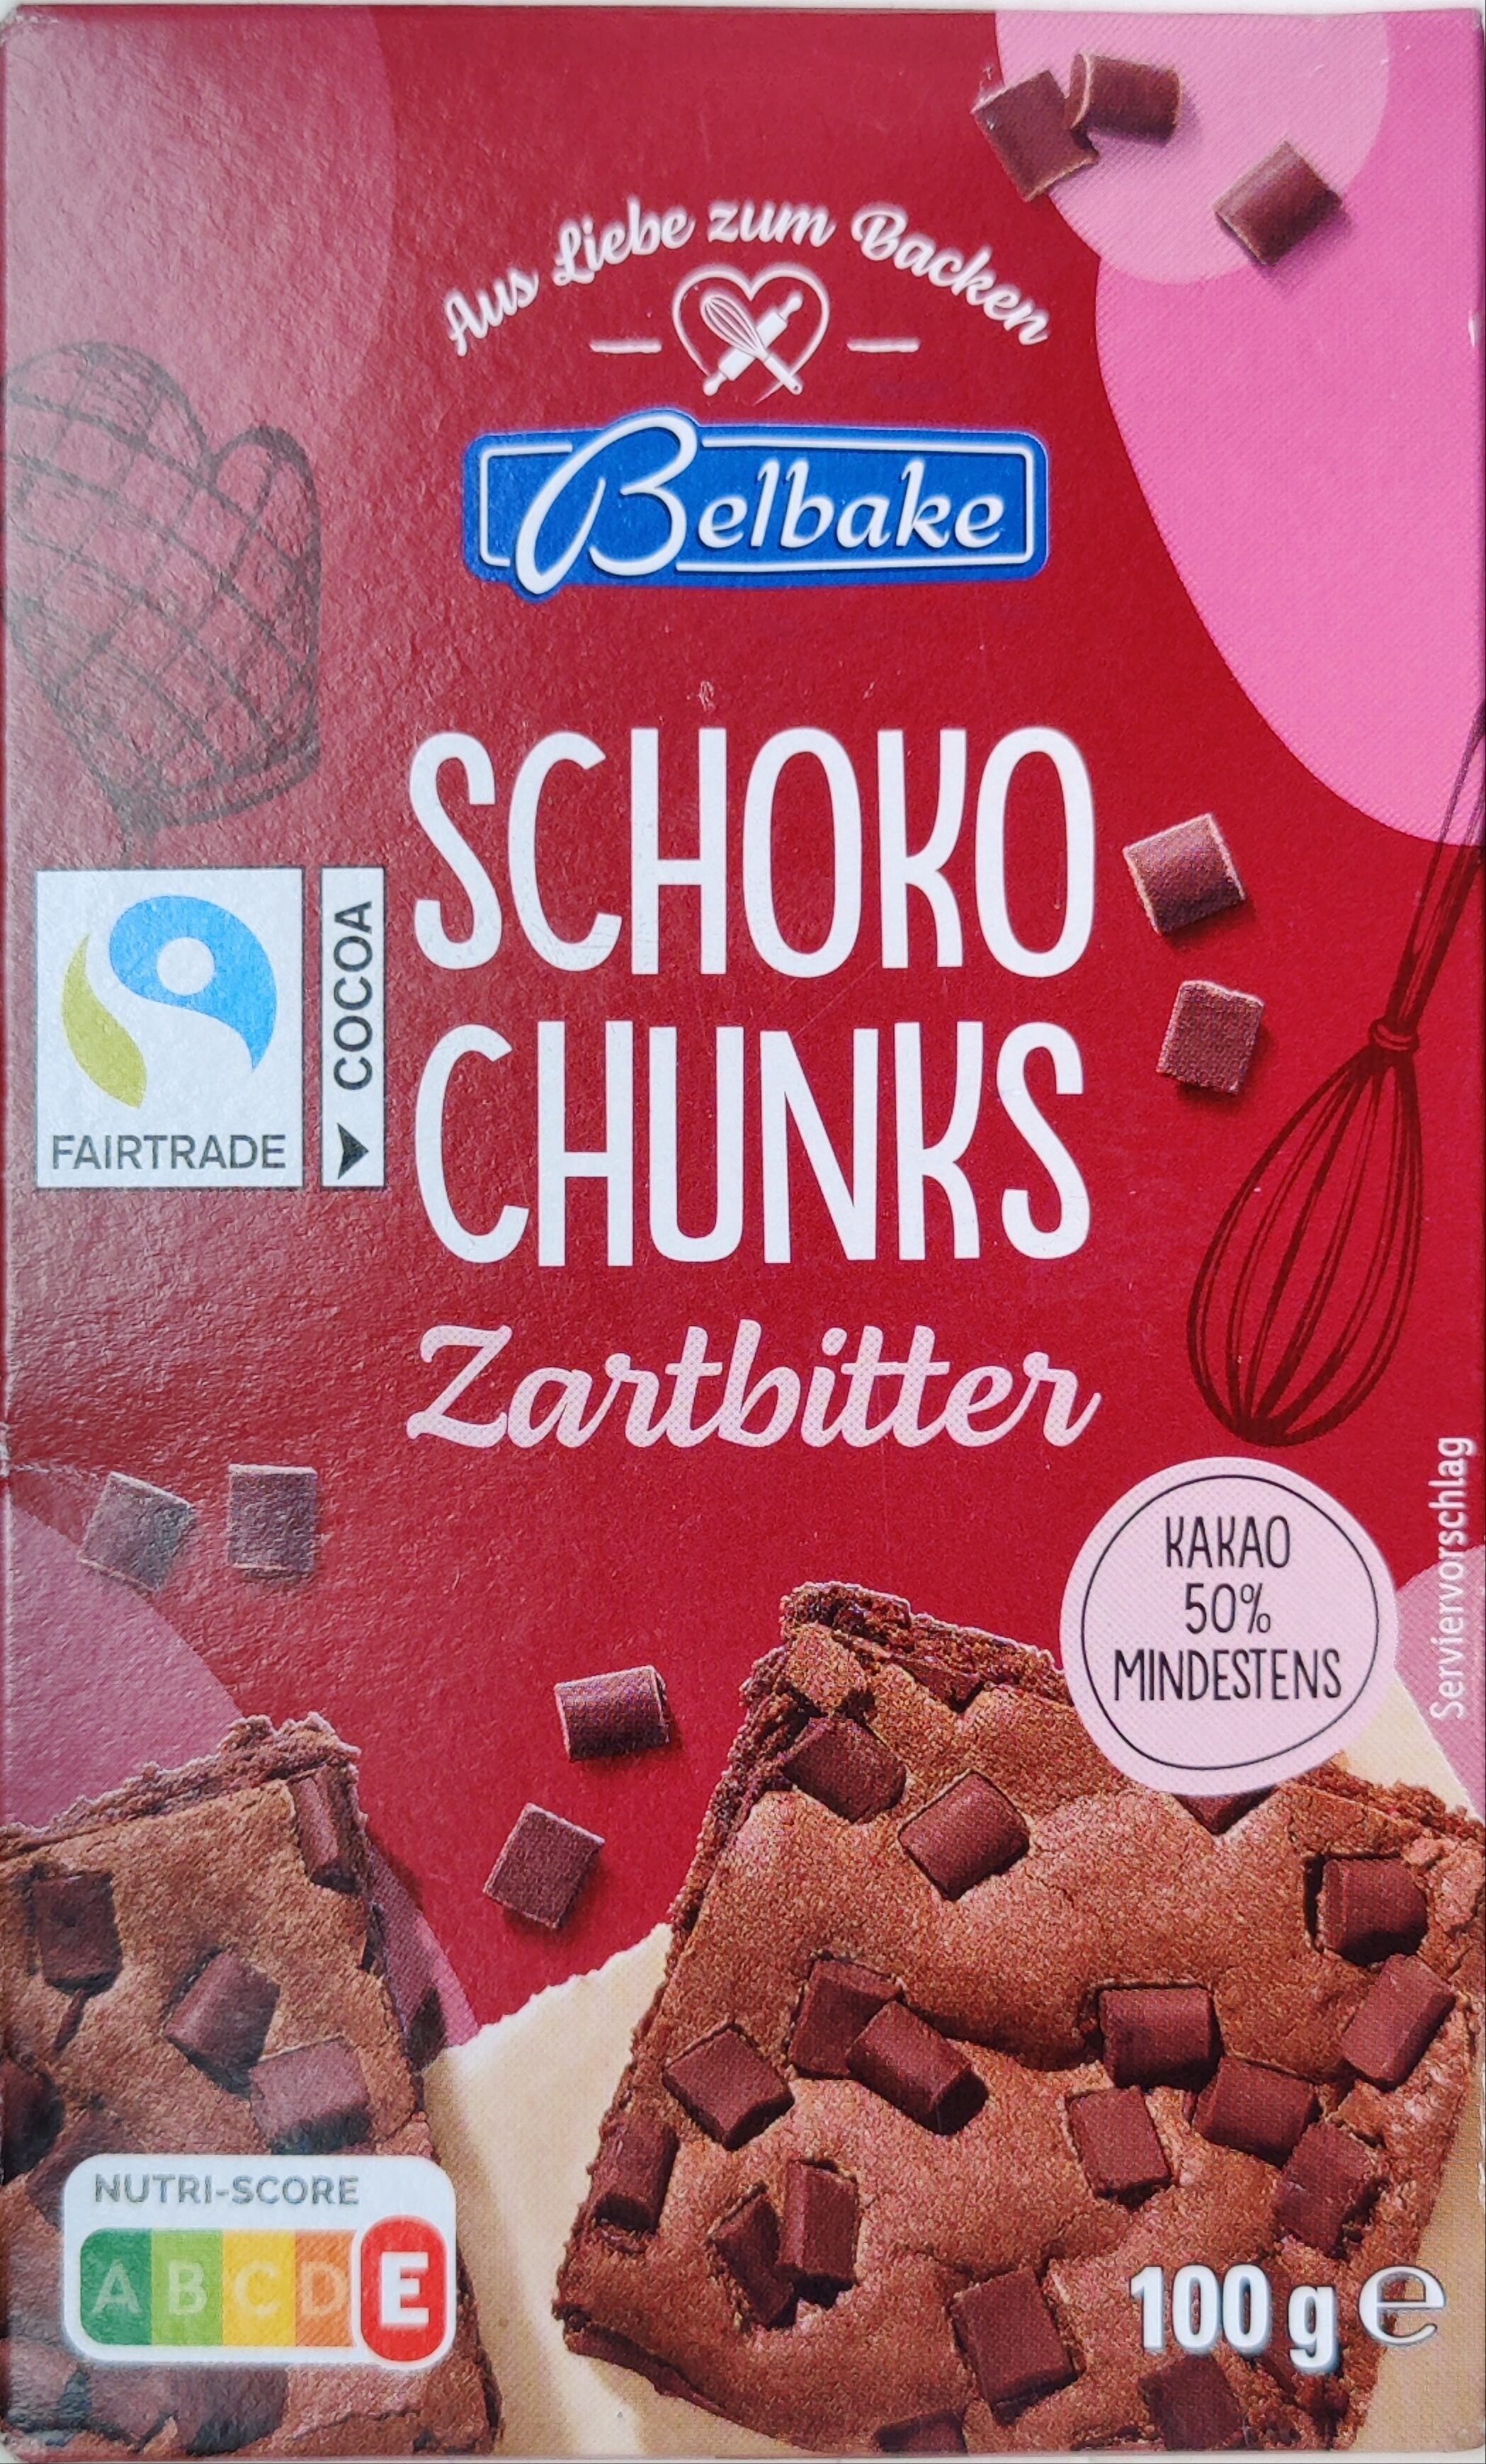 Schokochunks Zartbitter - Product - de